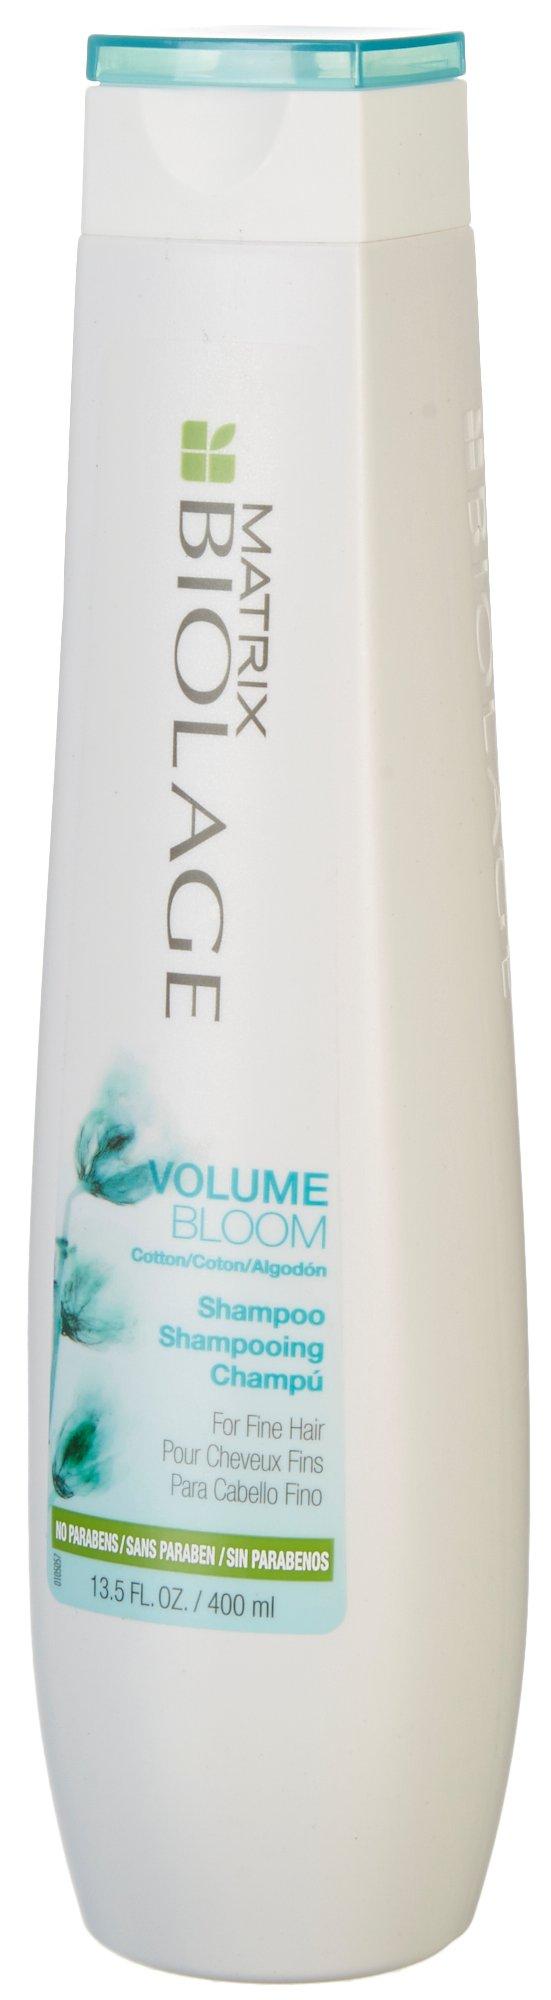 Volume Bloom Shampoo For Fine Hair 13.5 Fl. Oz.